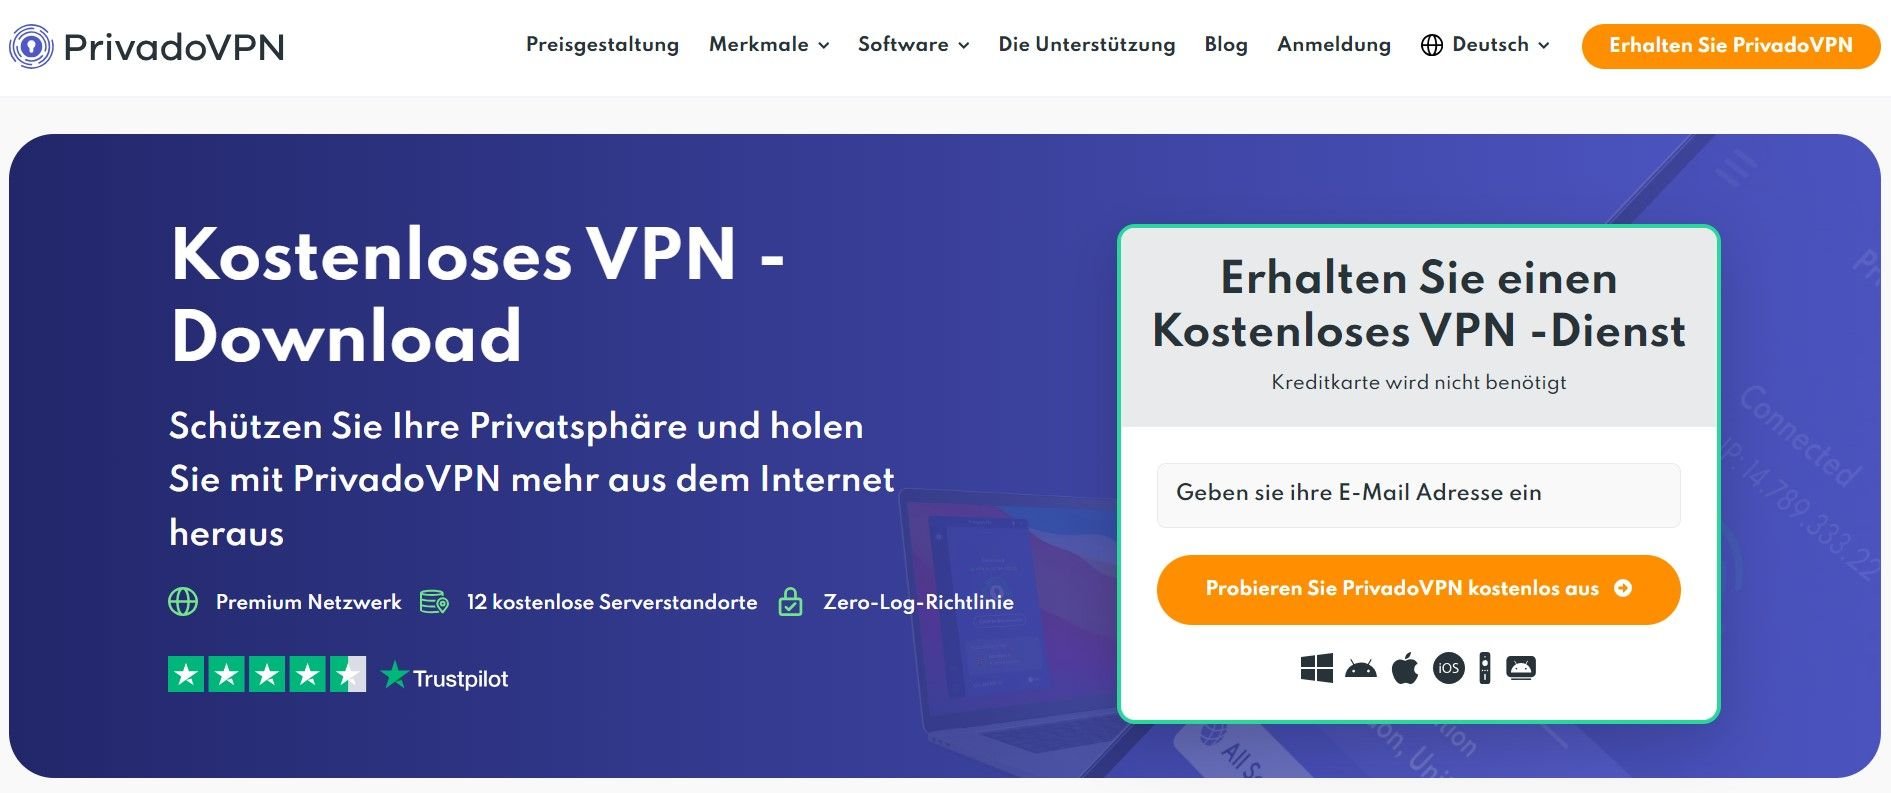 PrivadoVPN bestes kostenloses VPN Brasilien gratis